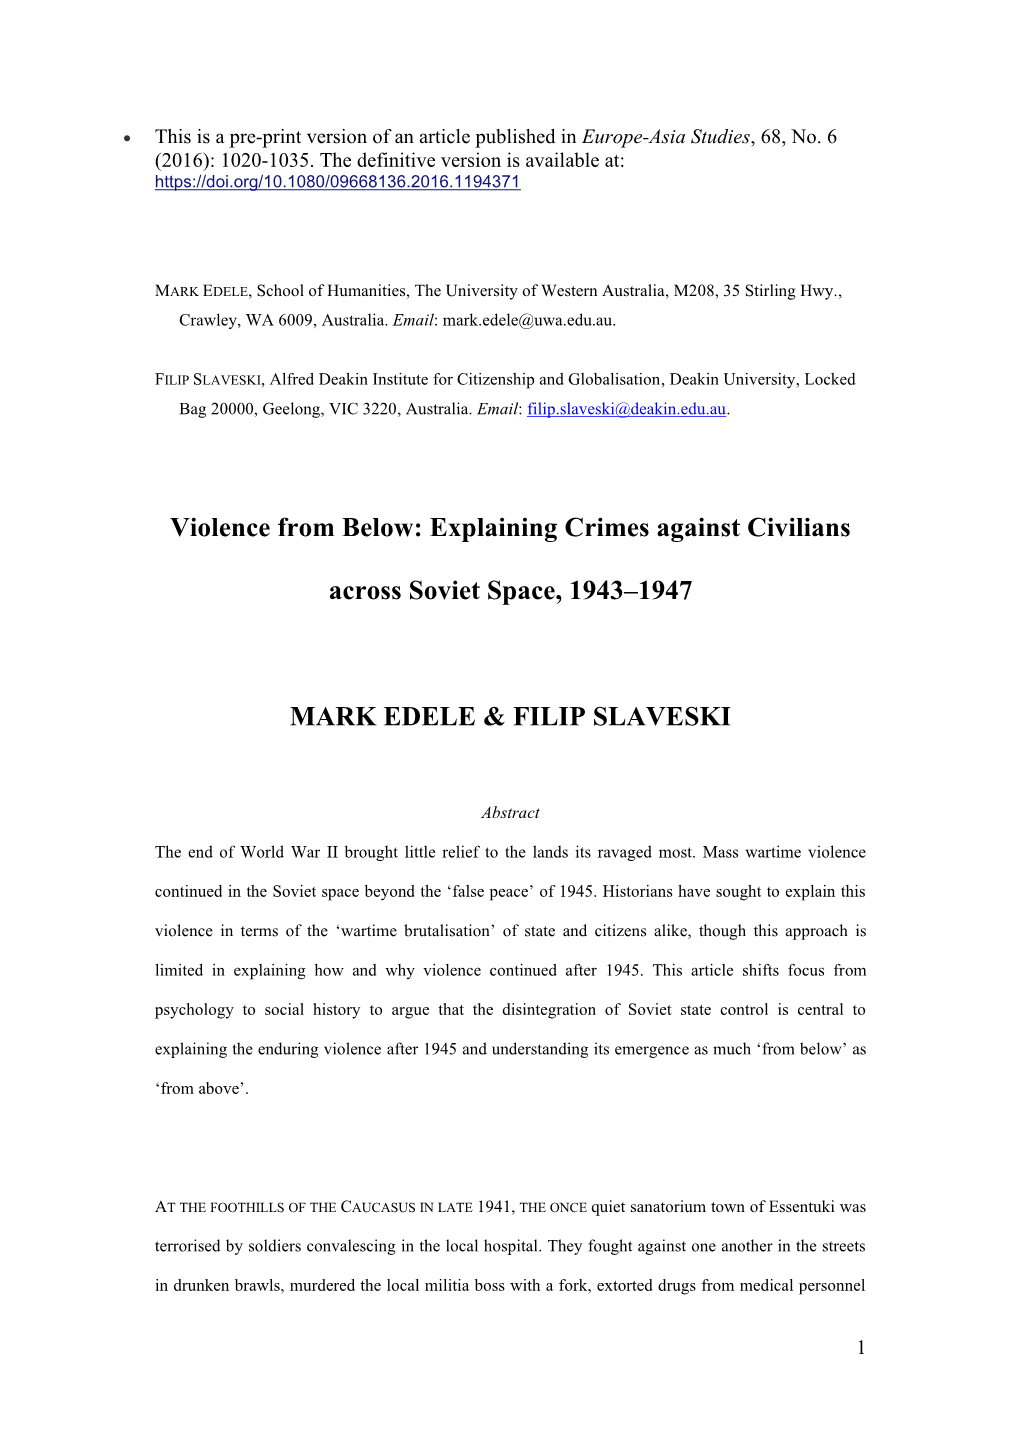 Violence from Below: Explaining Crimes Against Civilians Across Soviet Space, 1943–1947 MARK EDELE & FILIP SLAVESKI